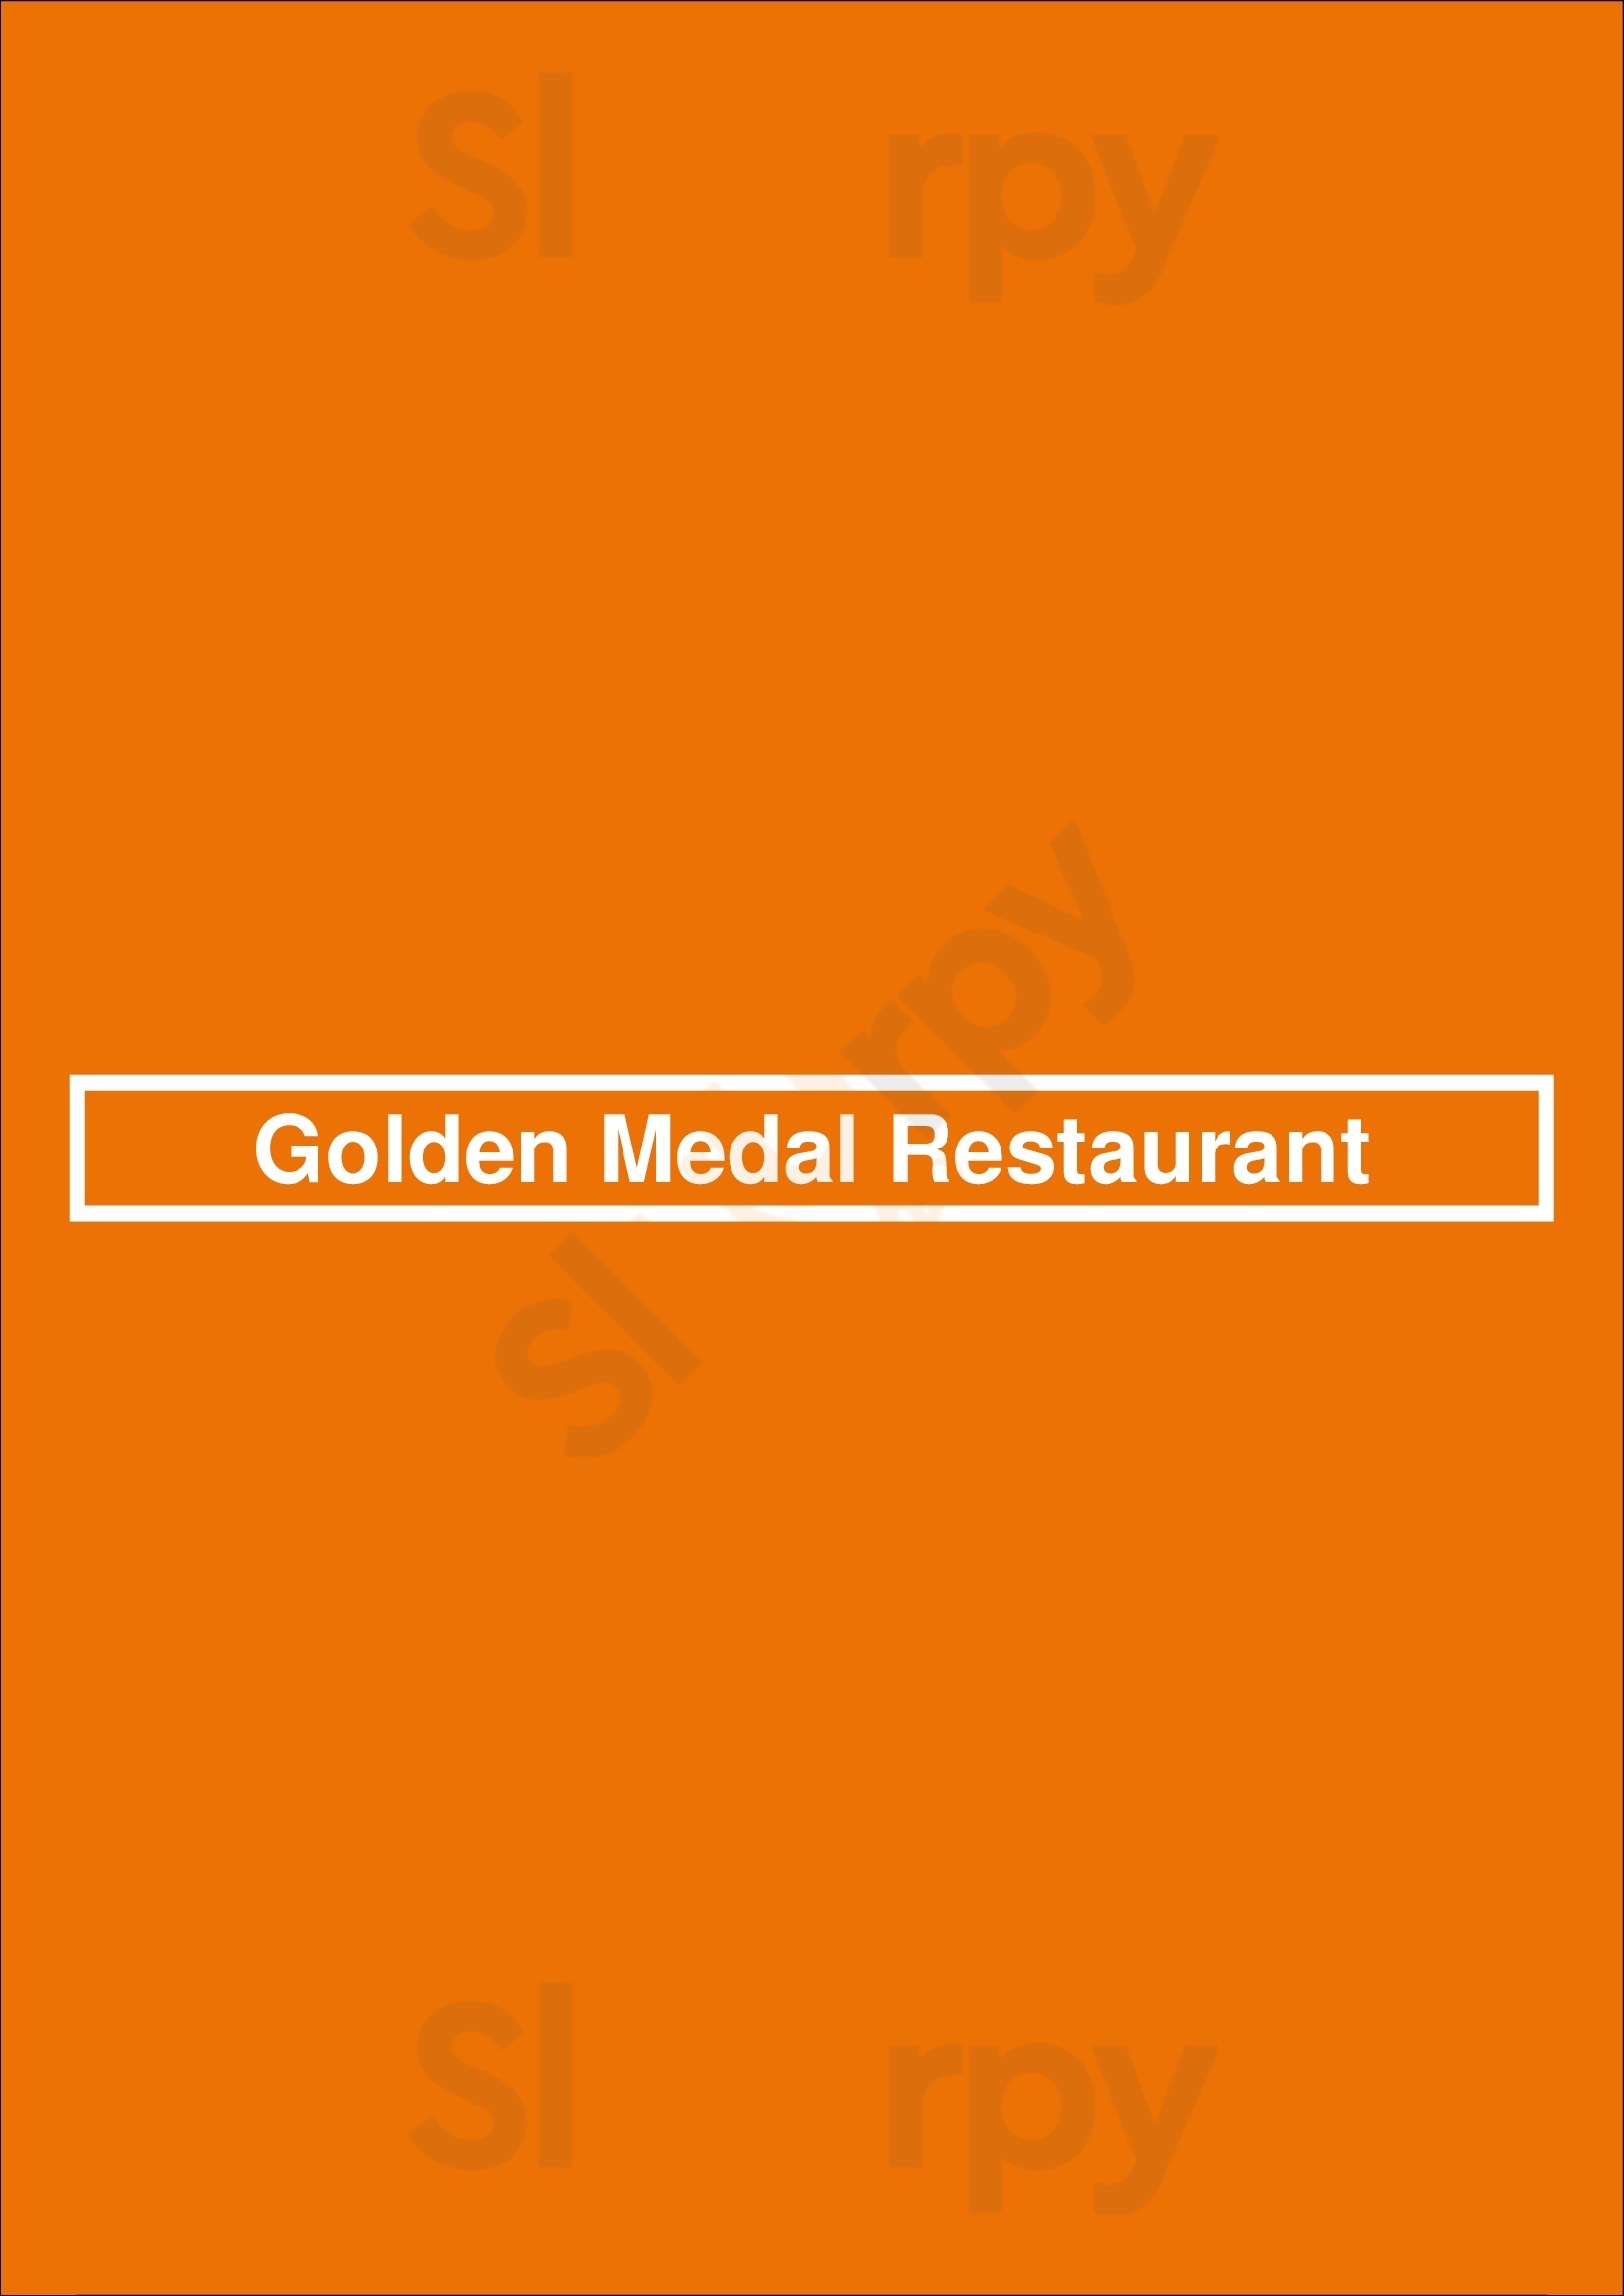 Golden Medal Restaurant Surrey Menu - 1